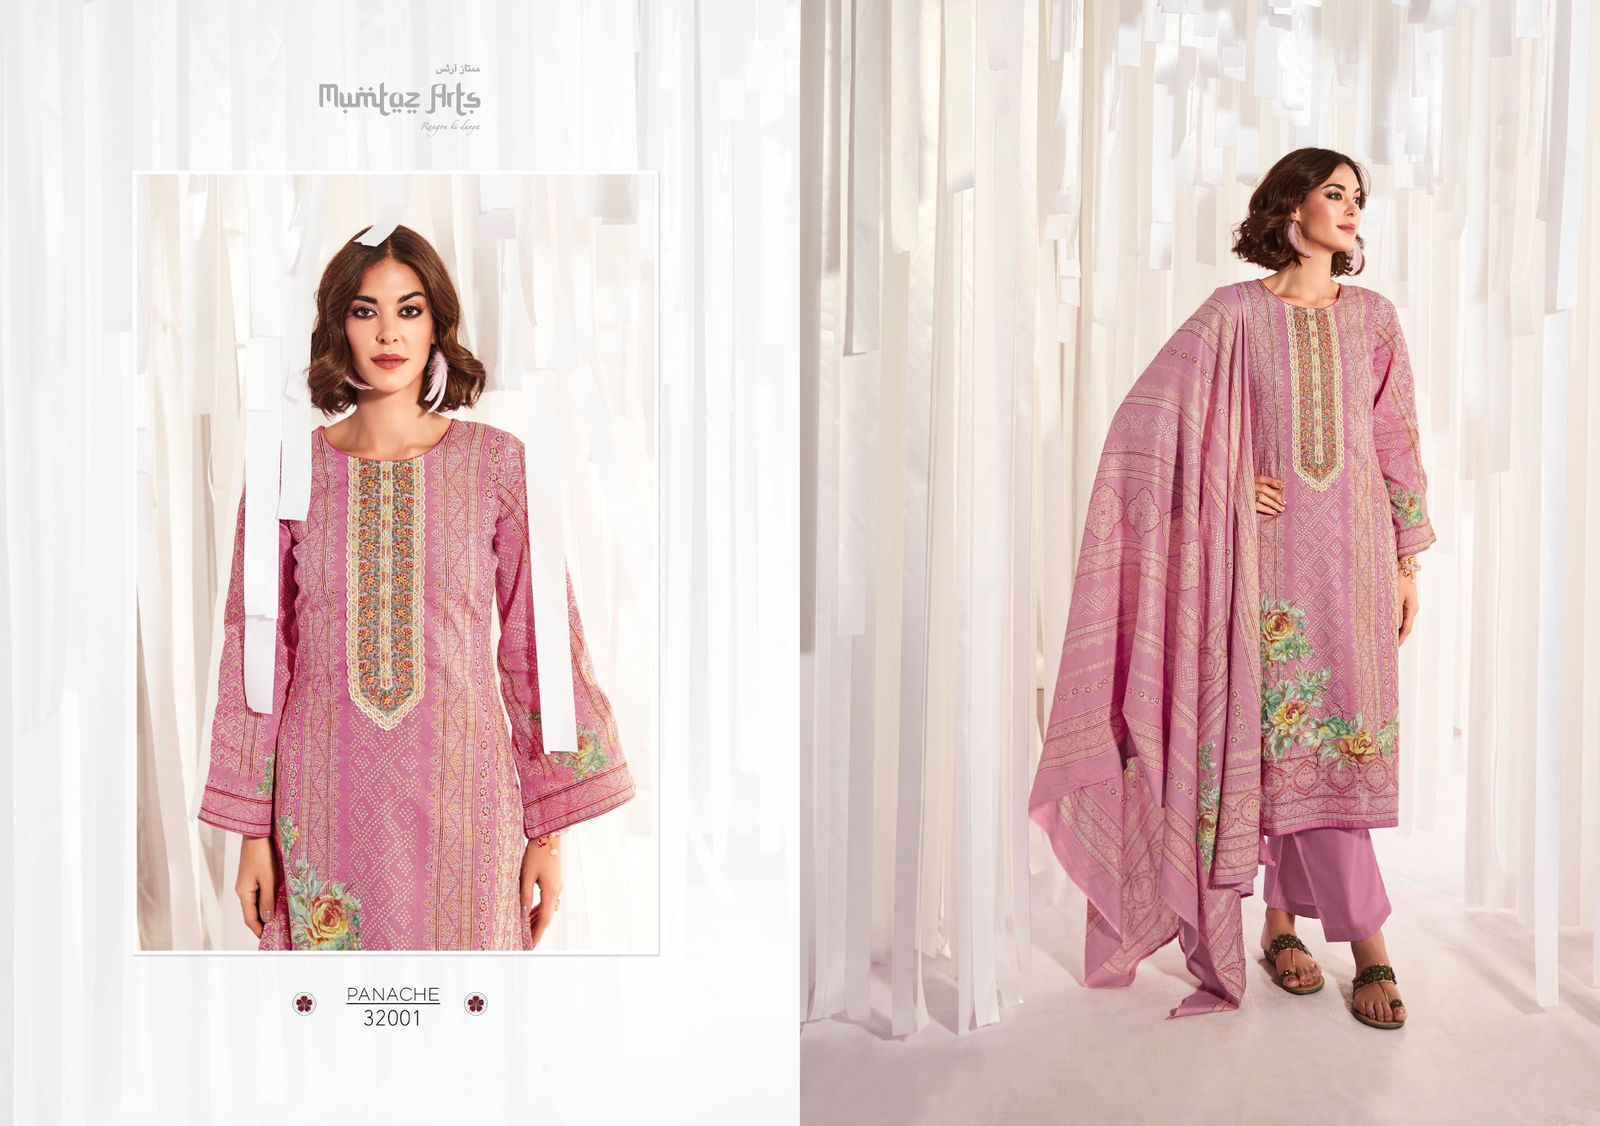 Mumtaz Arts Panache Cambric Lawn Dress Material Factory Price